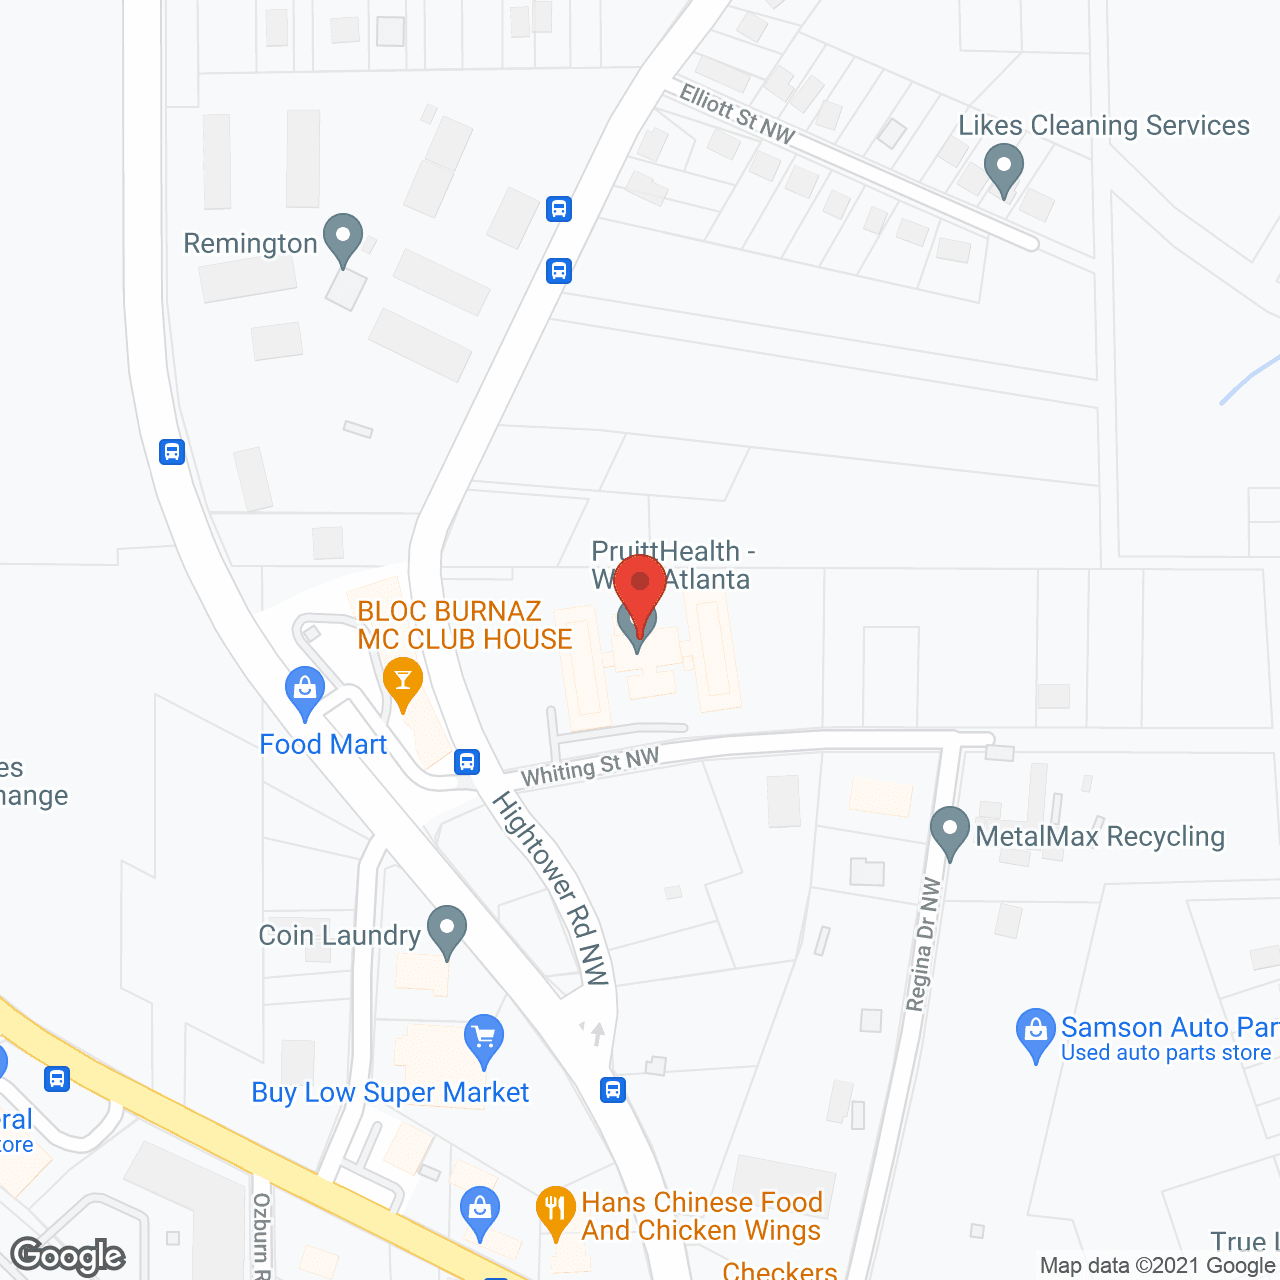 Pruitthealth of West Atlanta in google map